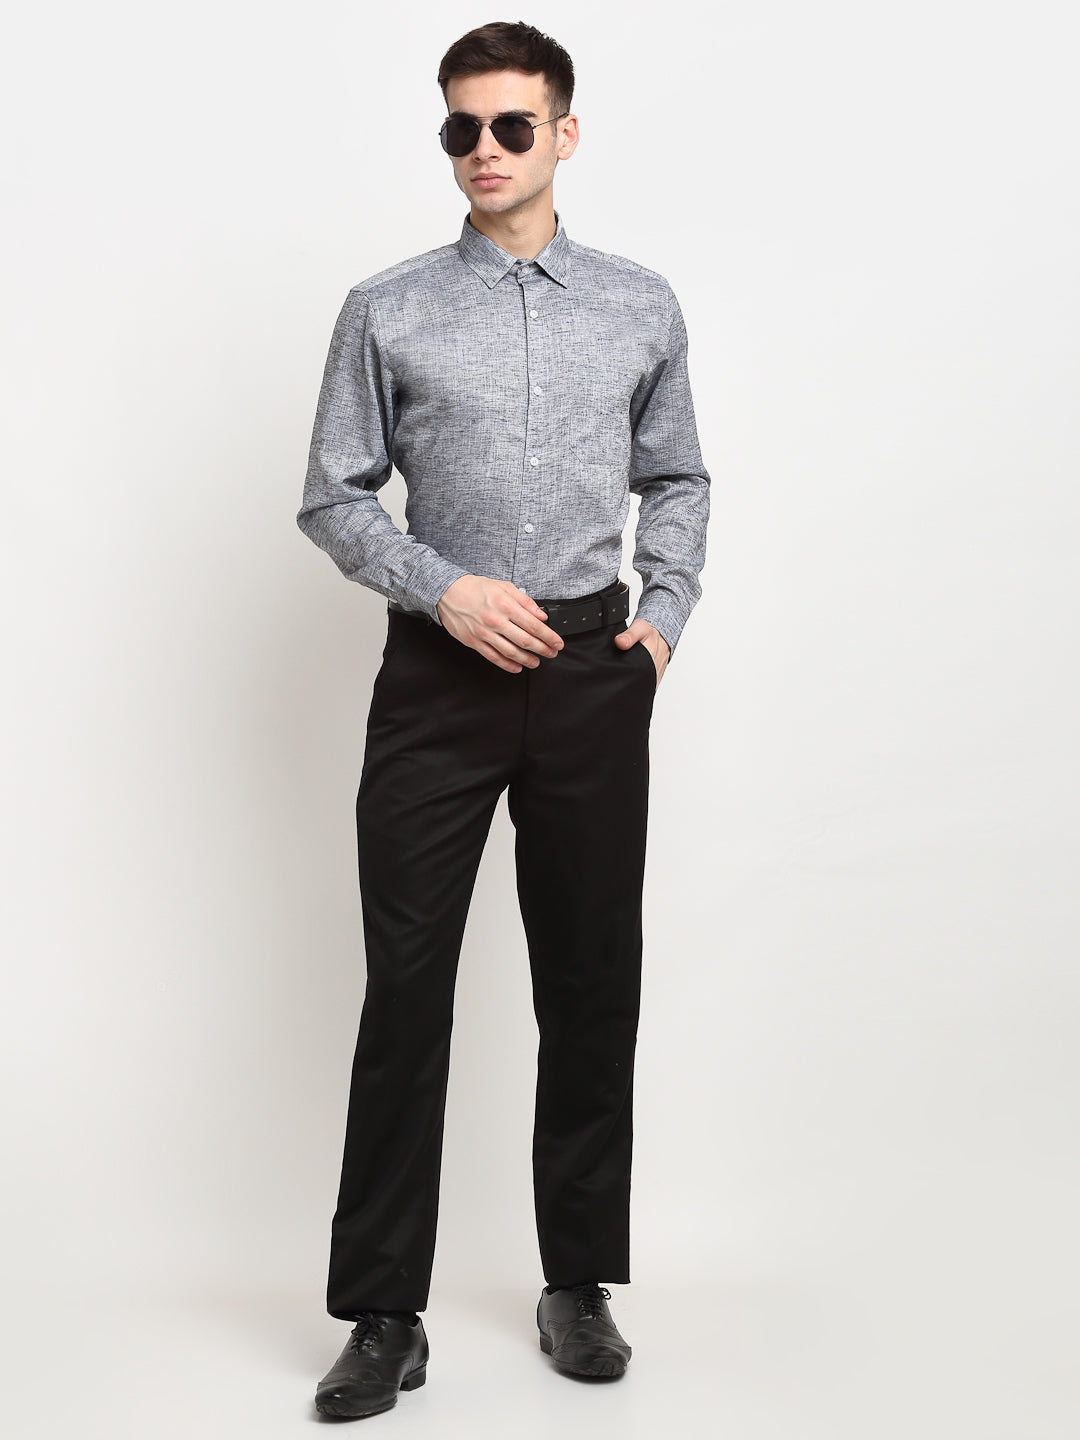 Men's Grey Solid Cotton Formal Shirt ( SF 782Grey ) - Jainish